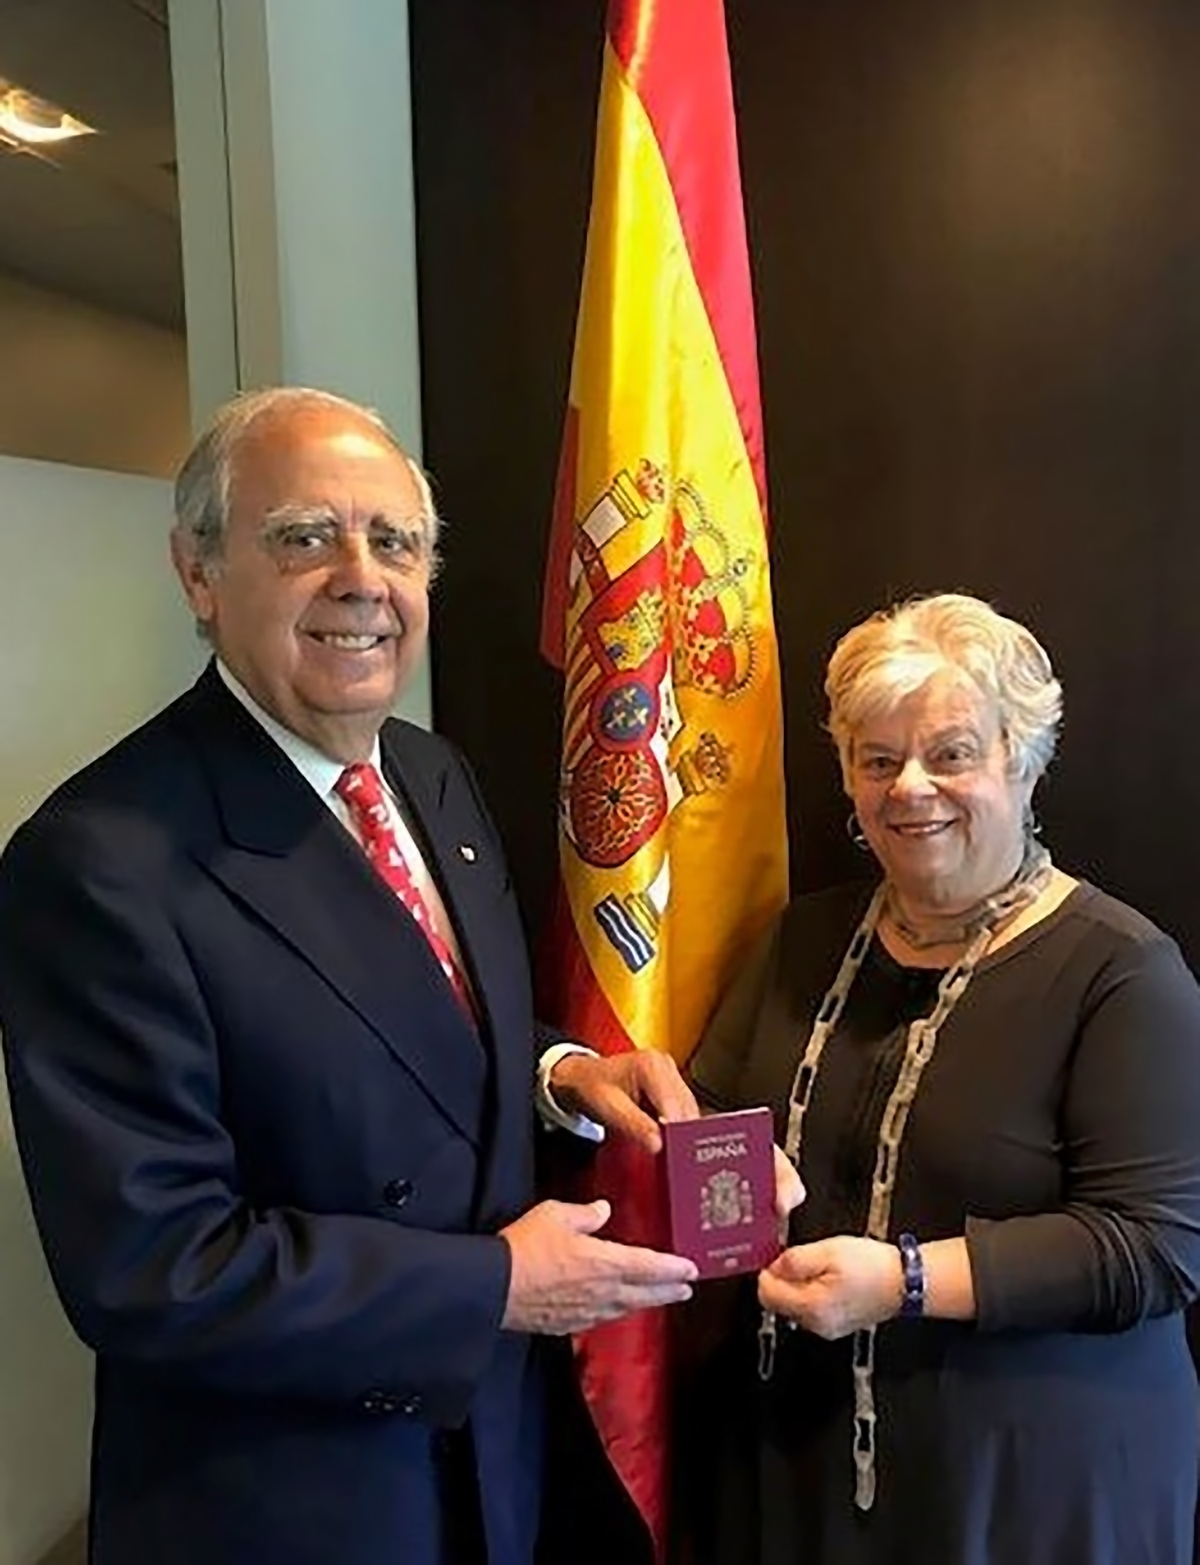 Doreen being presented her new Spanish passport by the Honorary Consul of Spain, Luis Fernando Esteban.